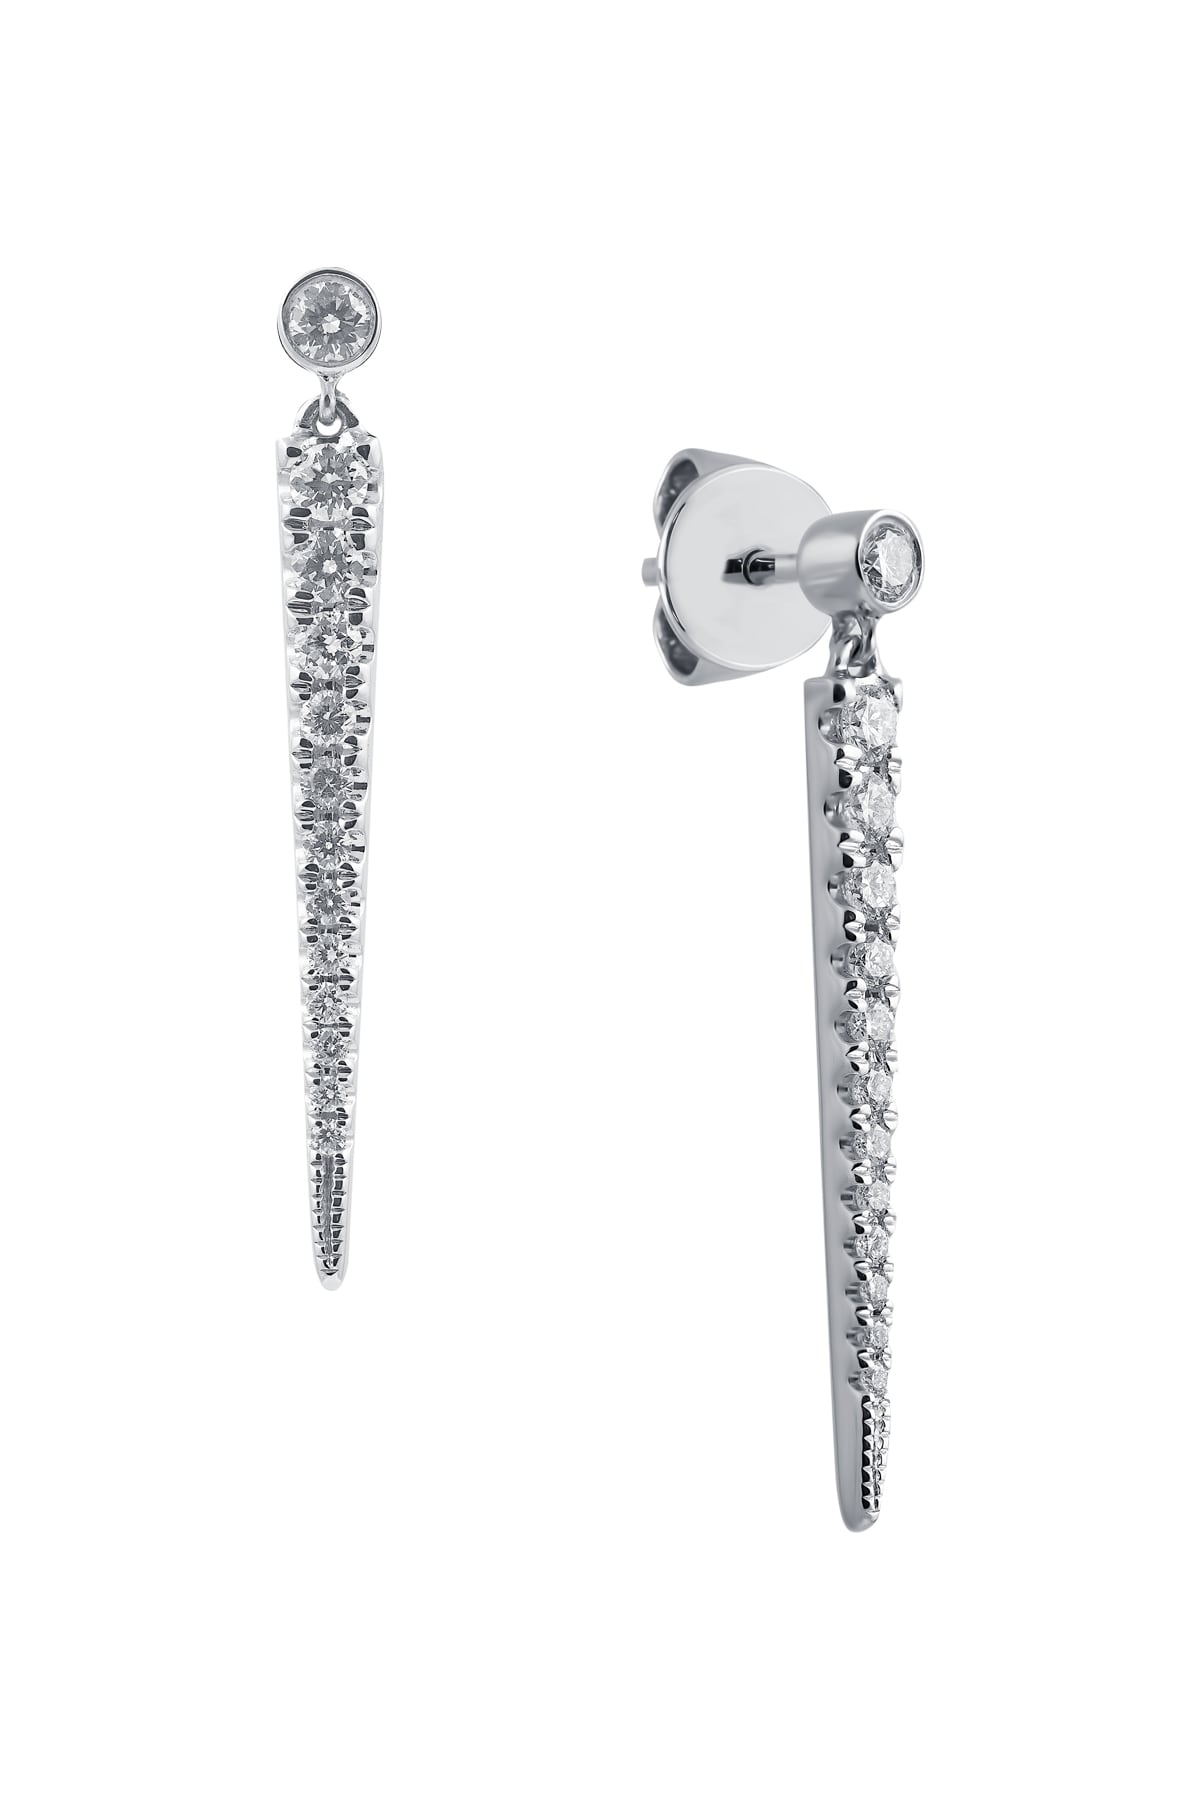 Tapered Diamond Drop Earrings from LeGassick Jewellery.